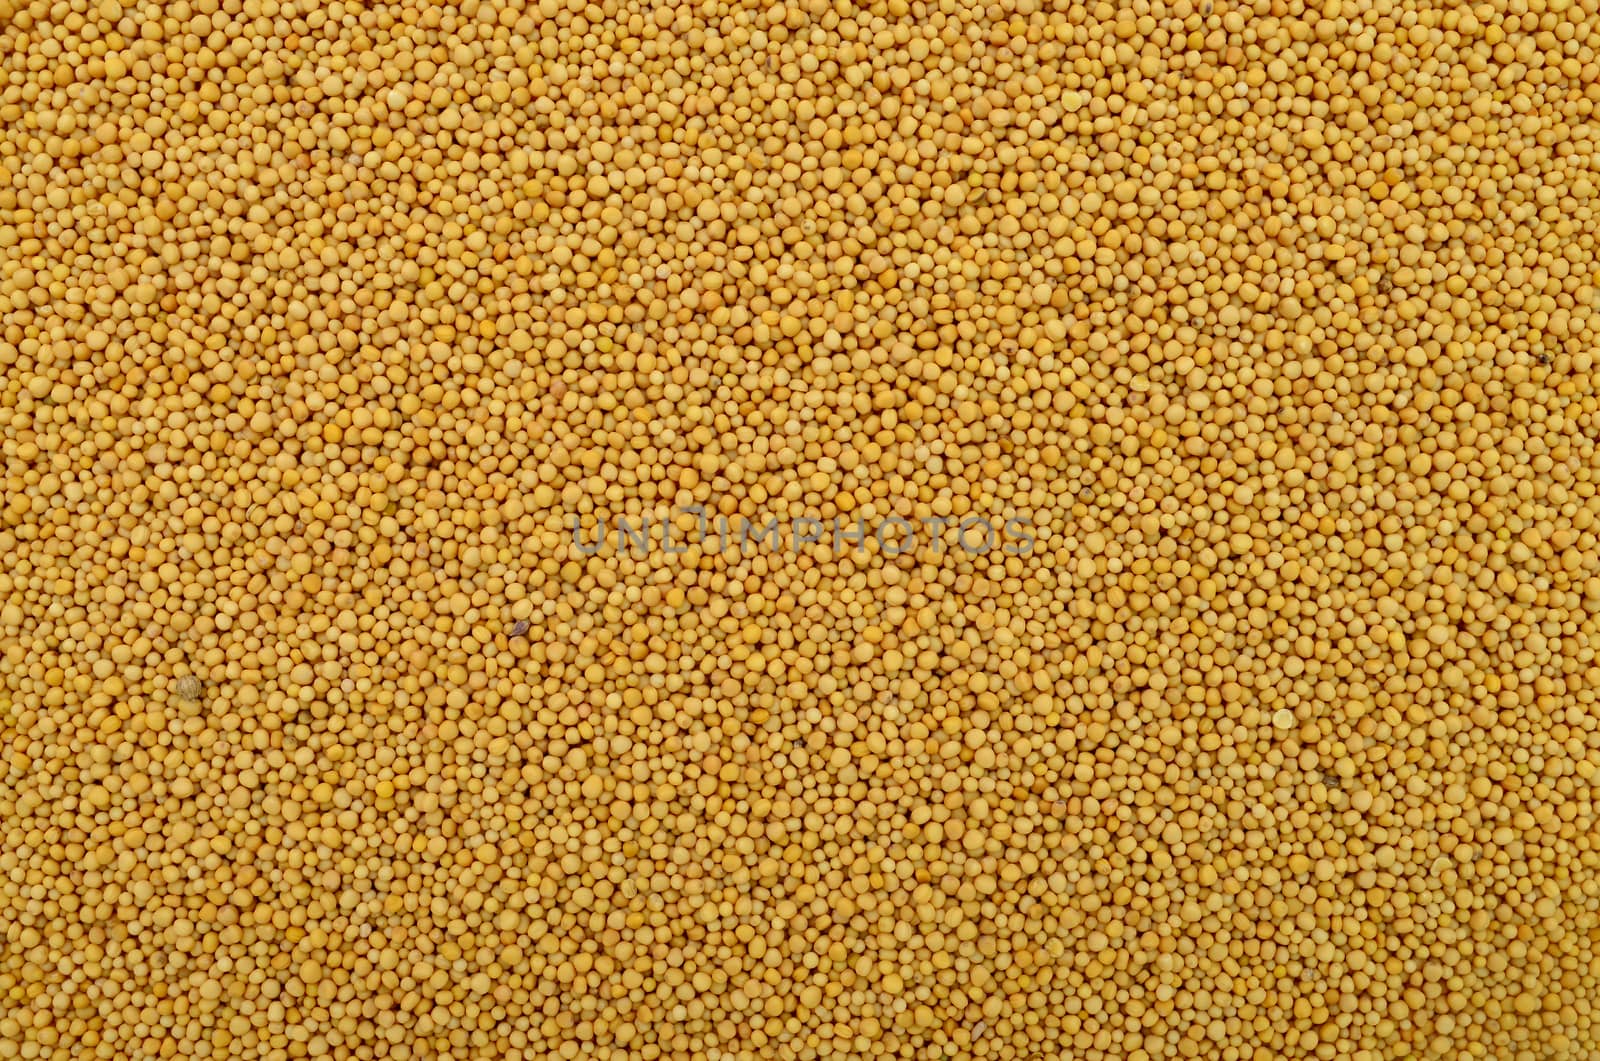 mustard seeds texture by tony4urban